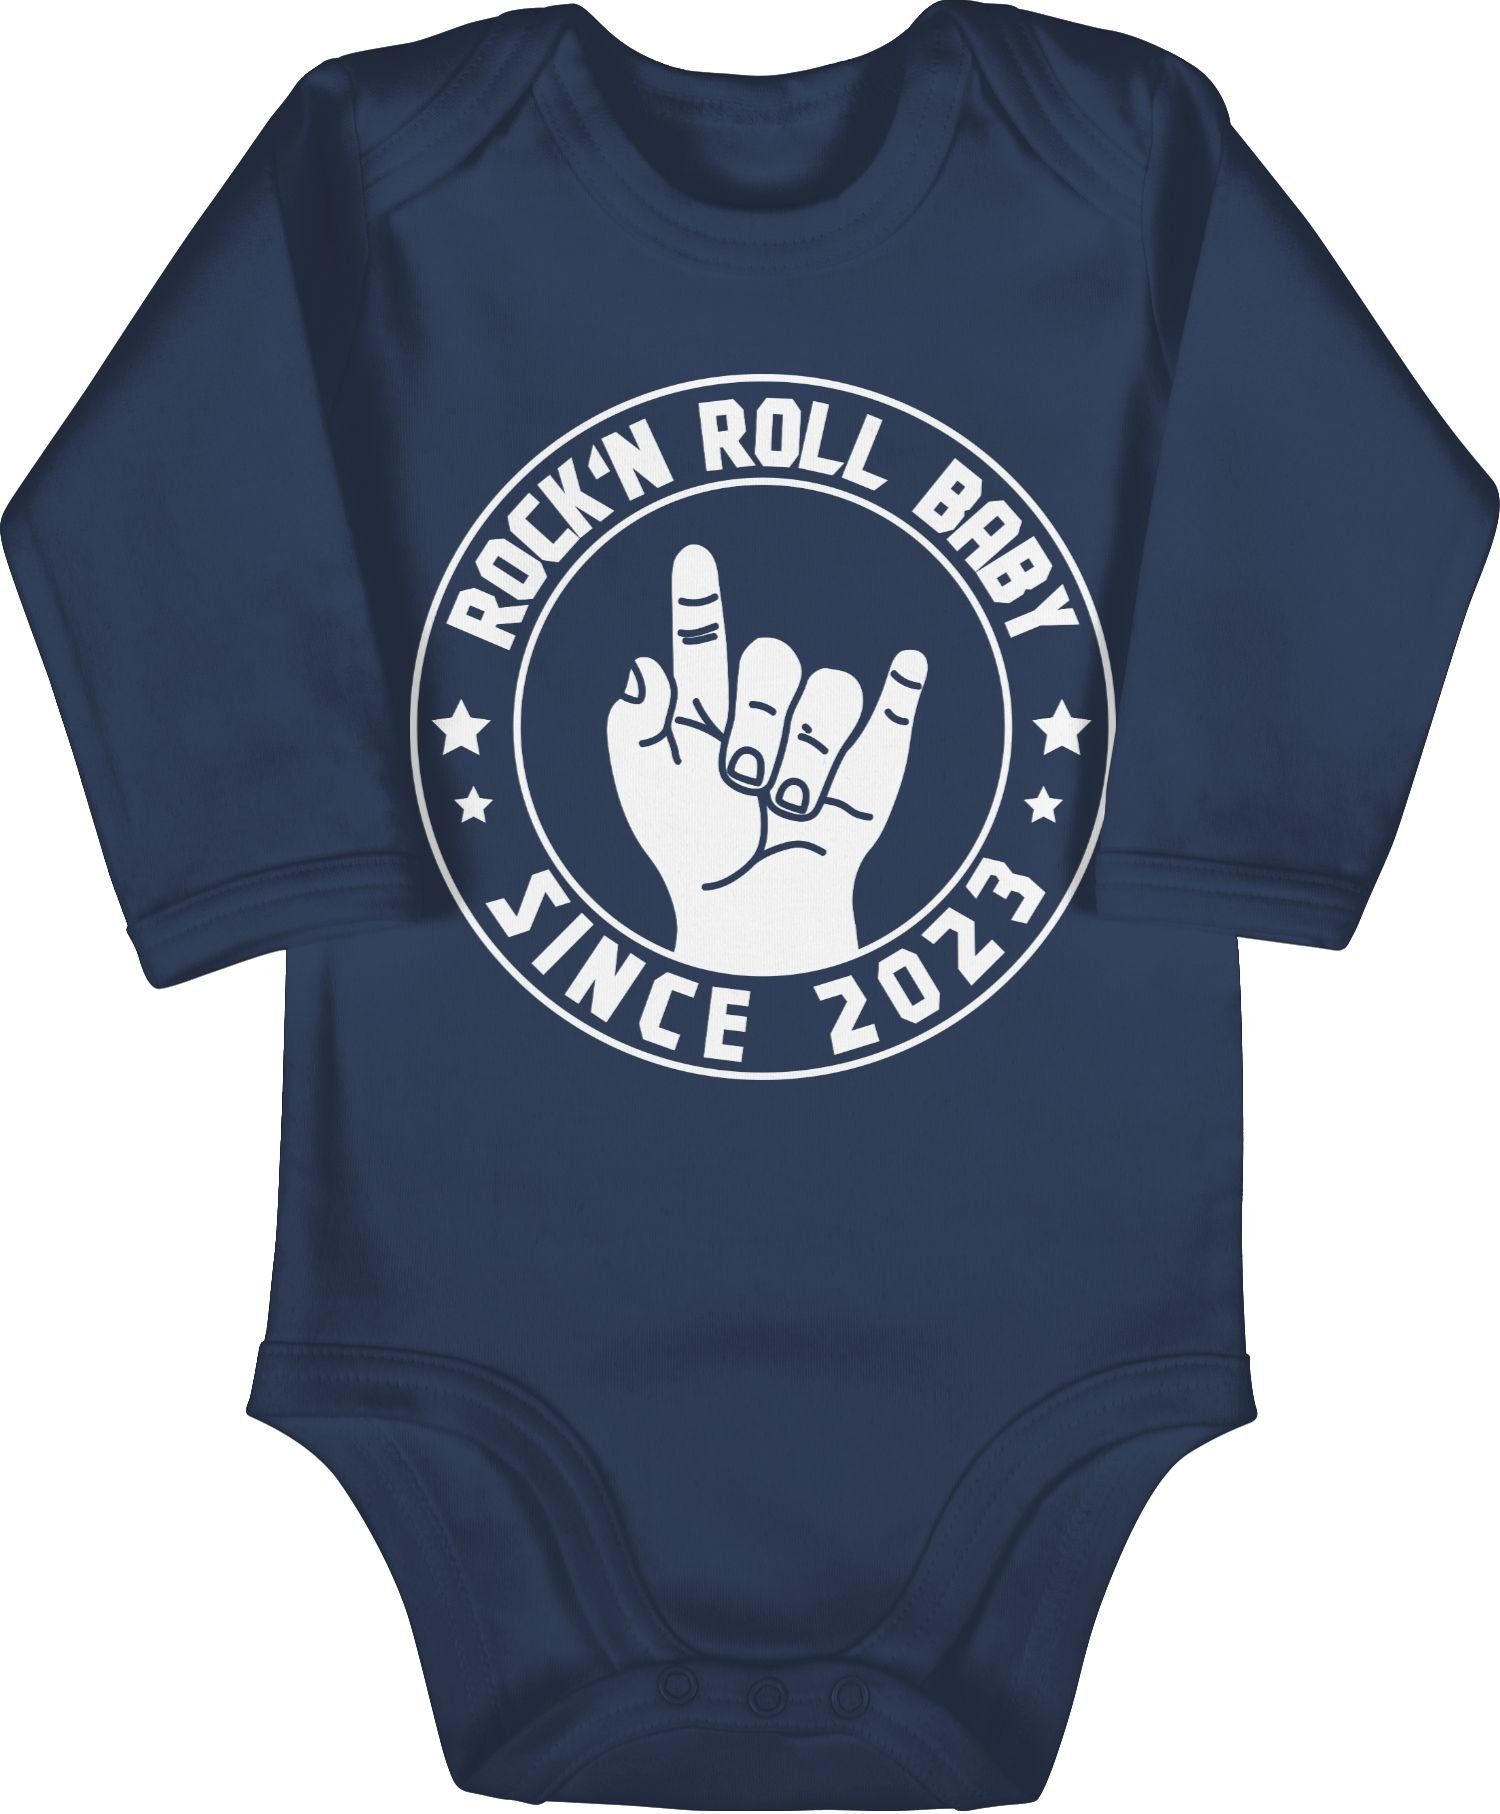 Shirtracer Shirtbody Rock'n Roll Baby since 2023 Sprüche Baby 3 Navy Blau